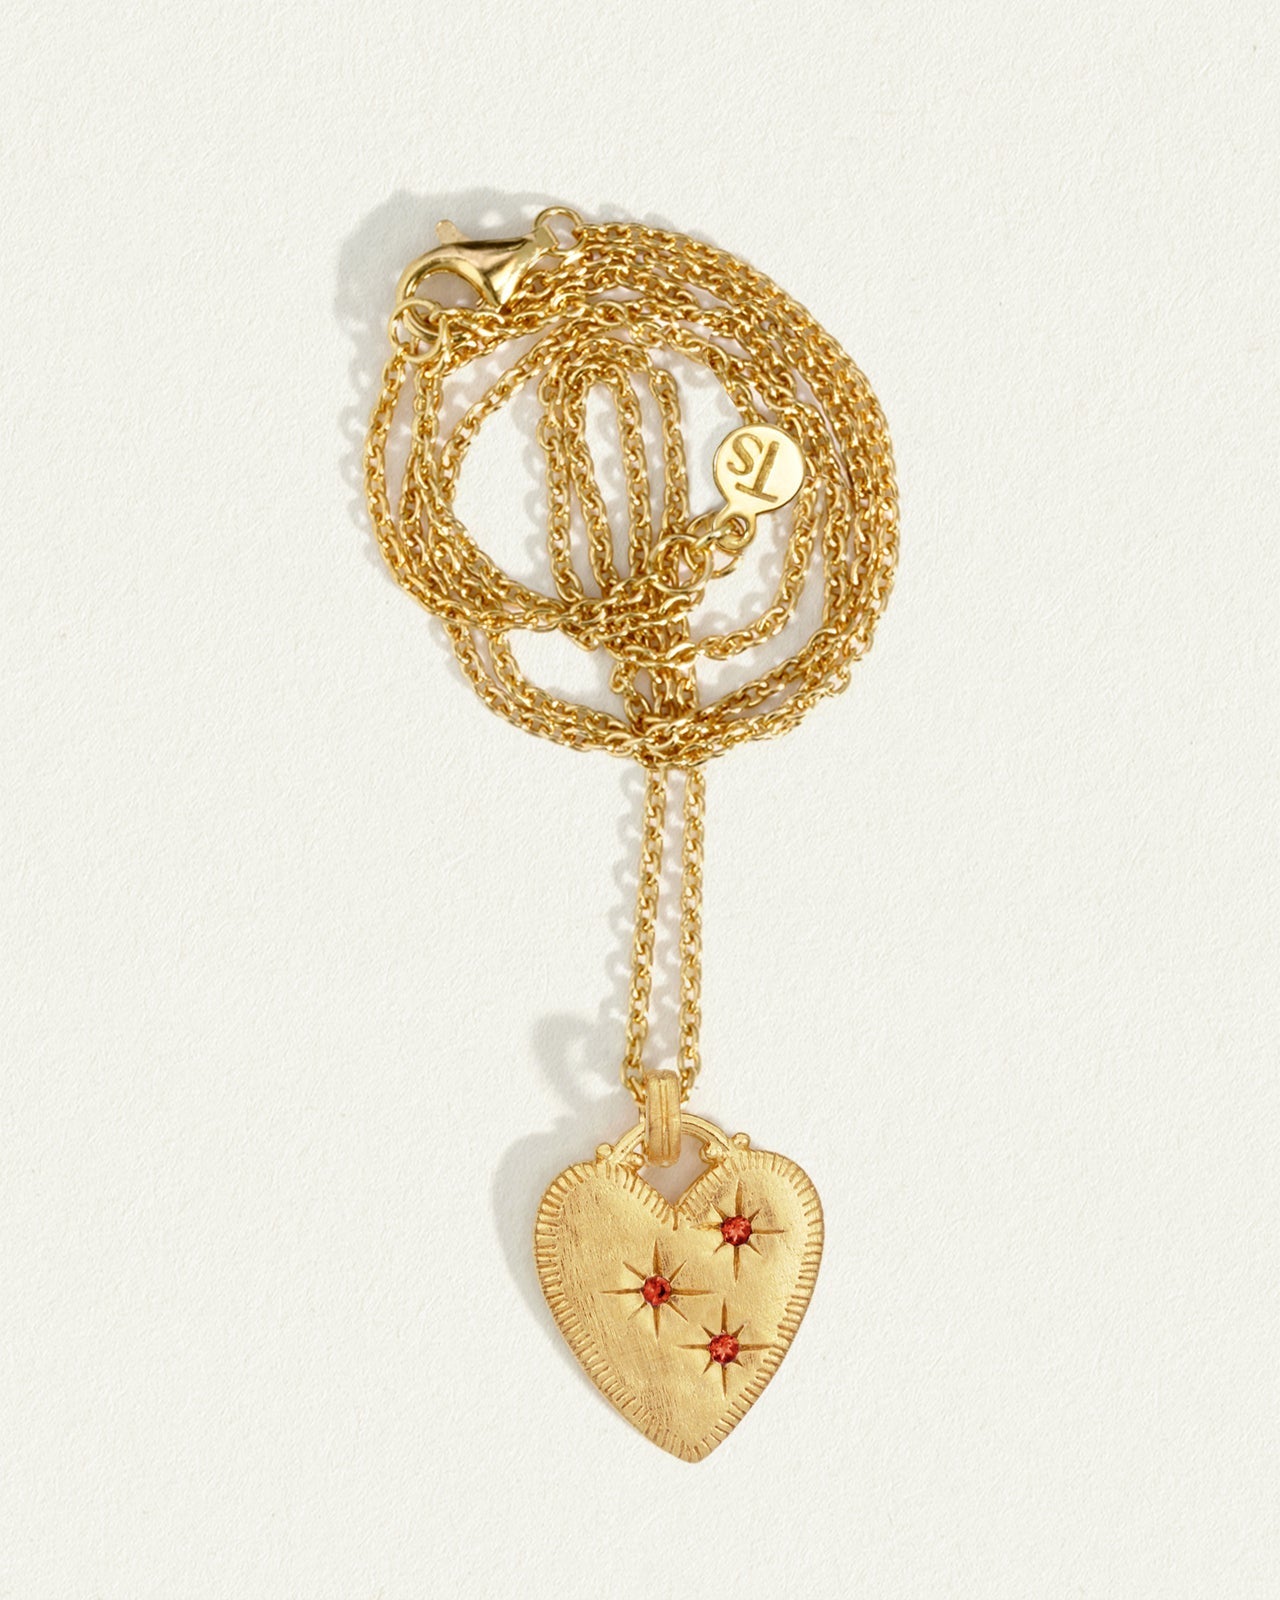 Louis Vuitton 18K White Gold Heart-Shaped Lion Pendant with